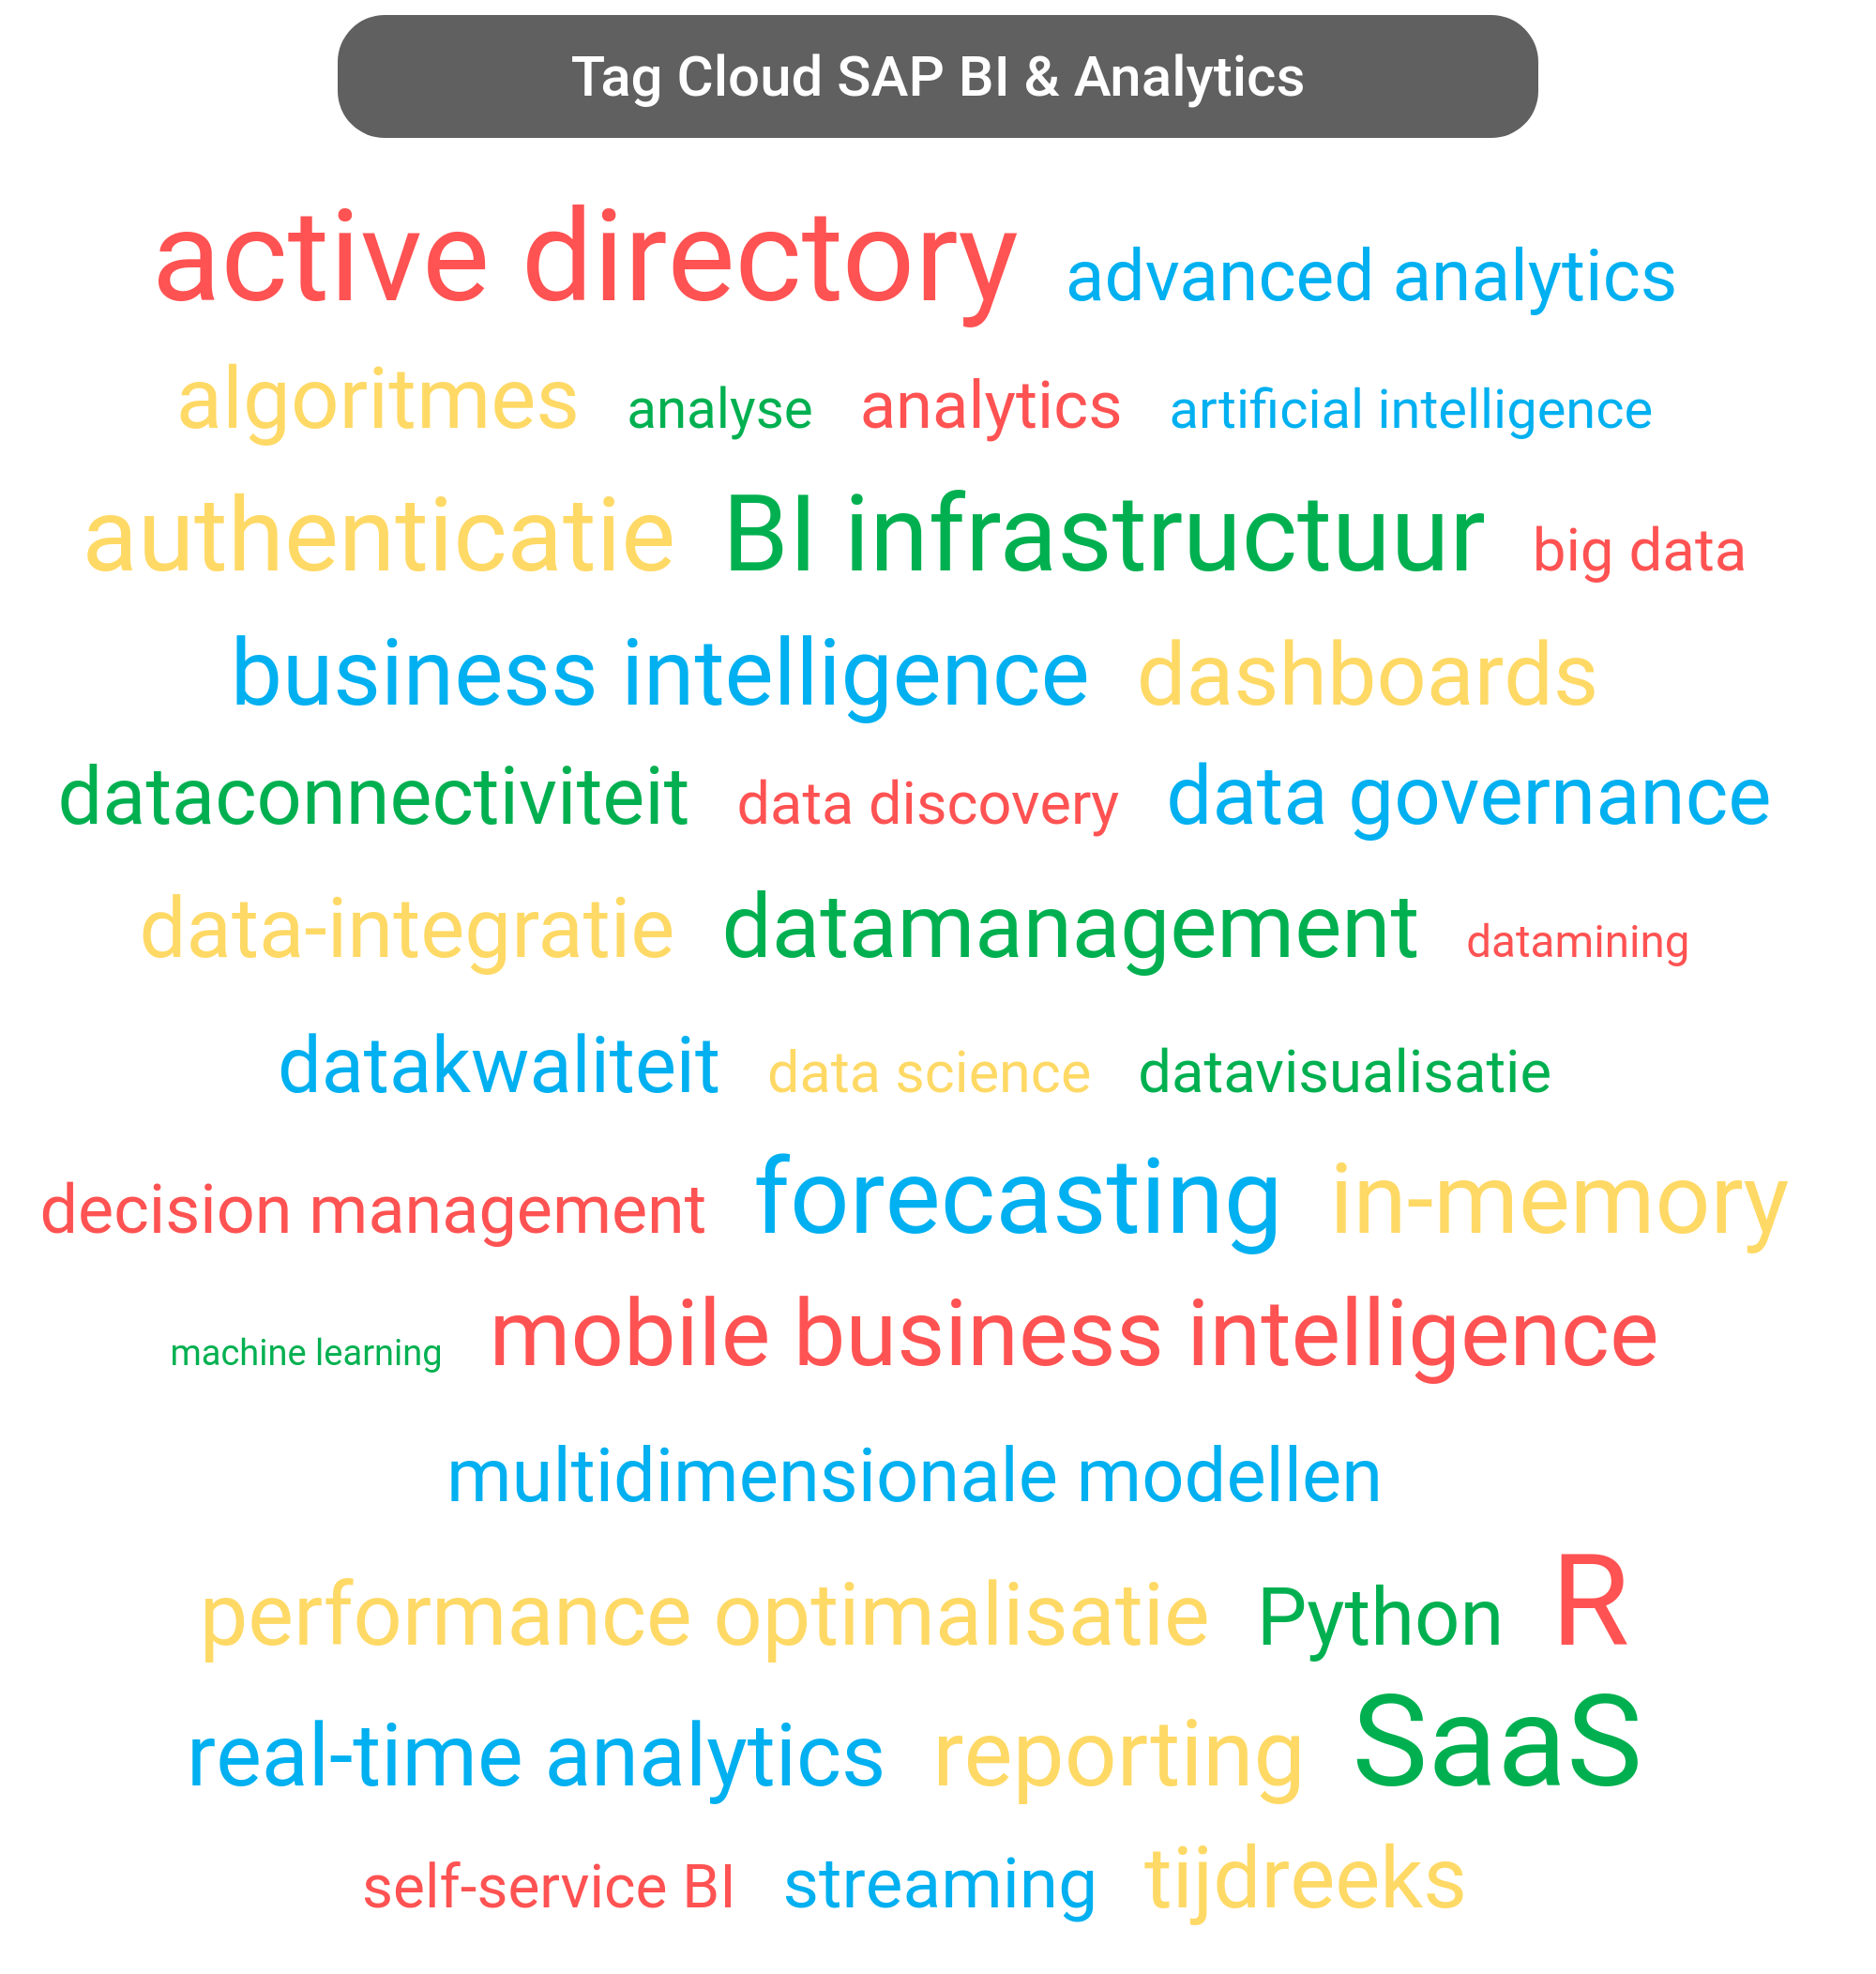 Tag cloud van SAP Analytics tools.